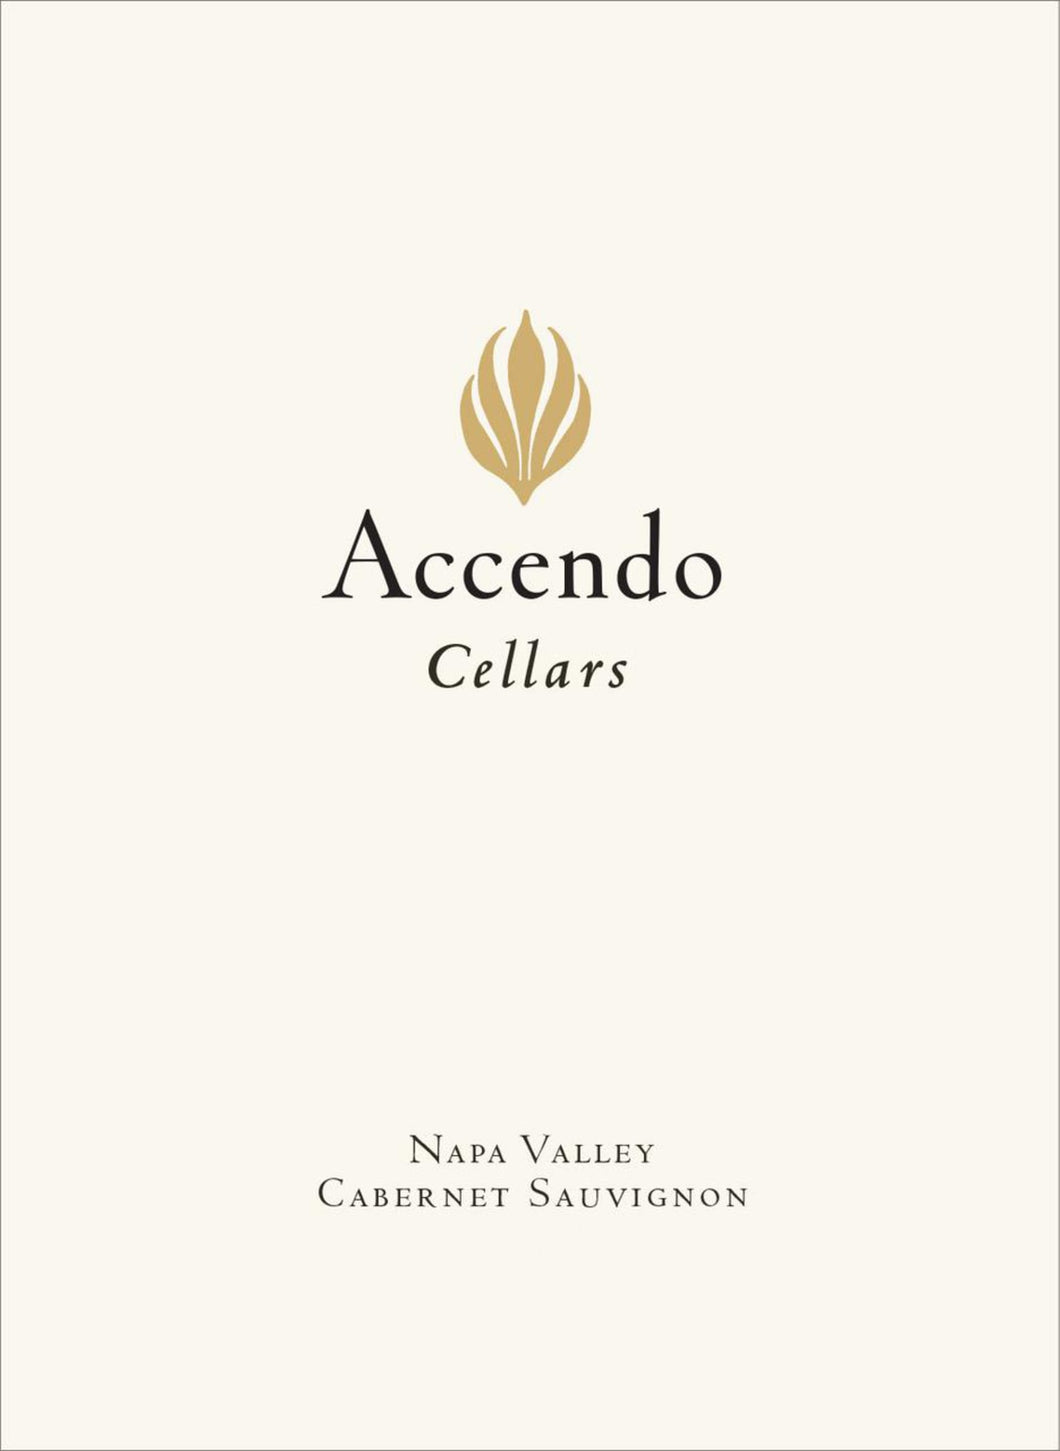 2017 Accendo Cellars Cabernet Sauvignon, Napa Valley